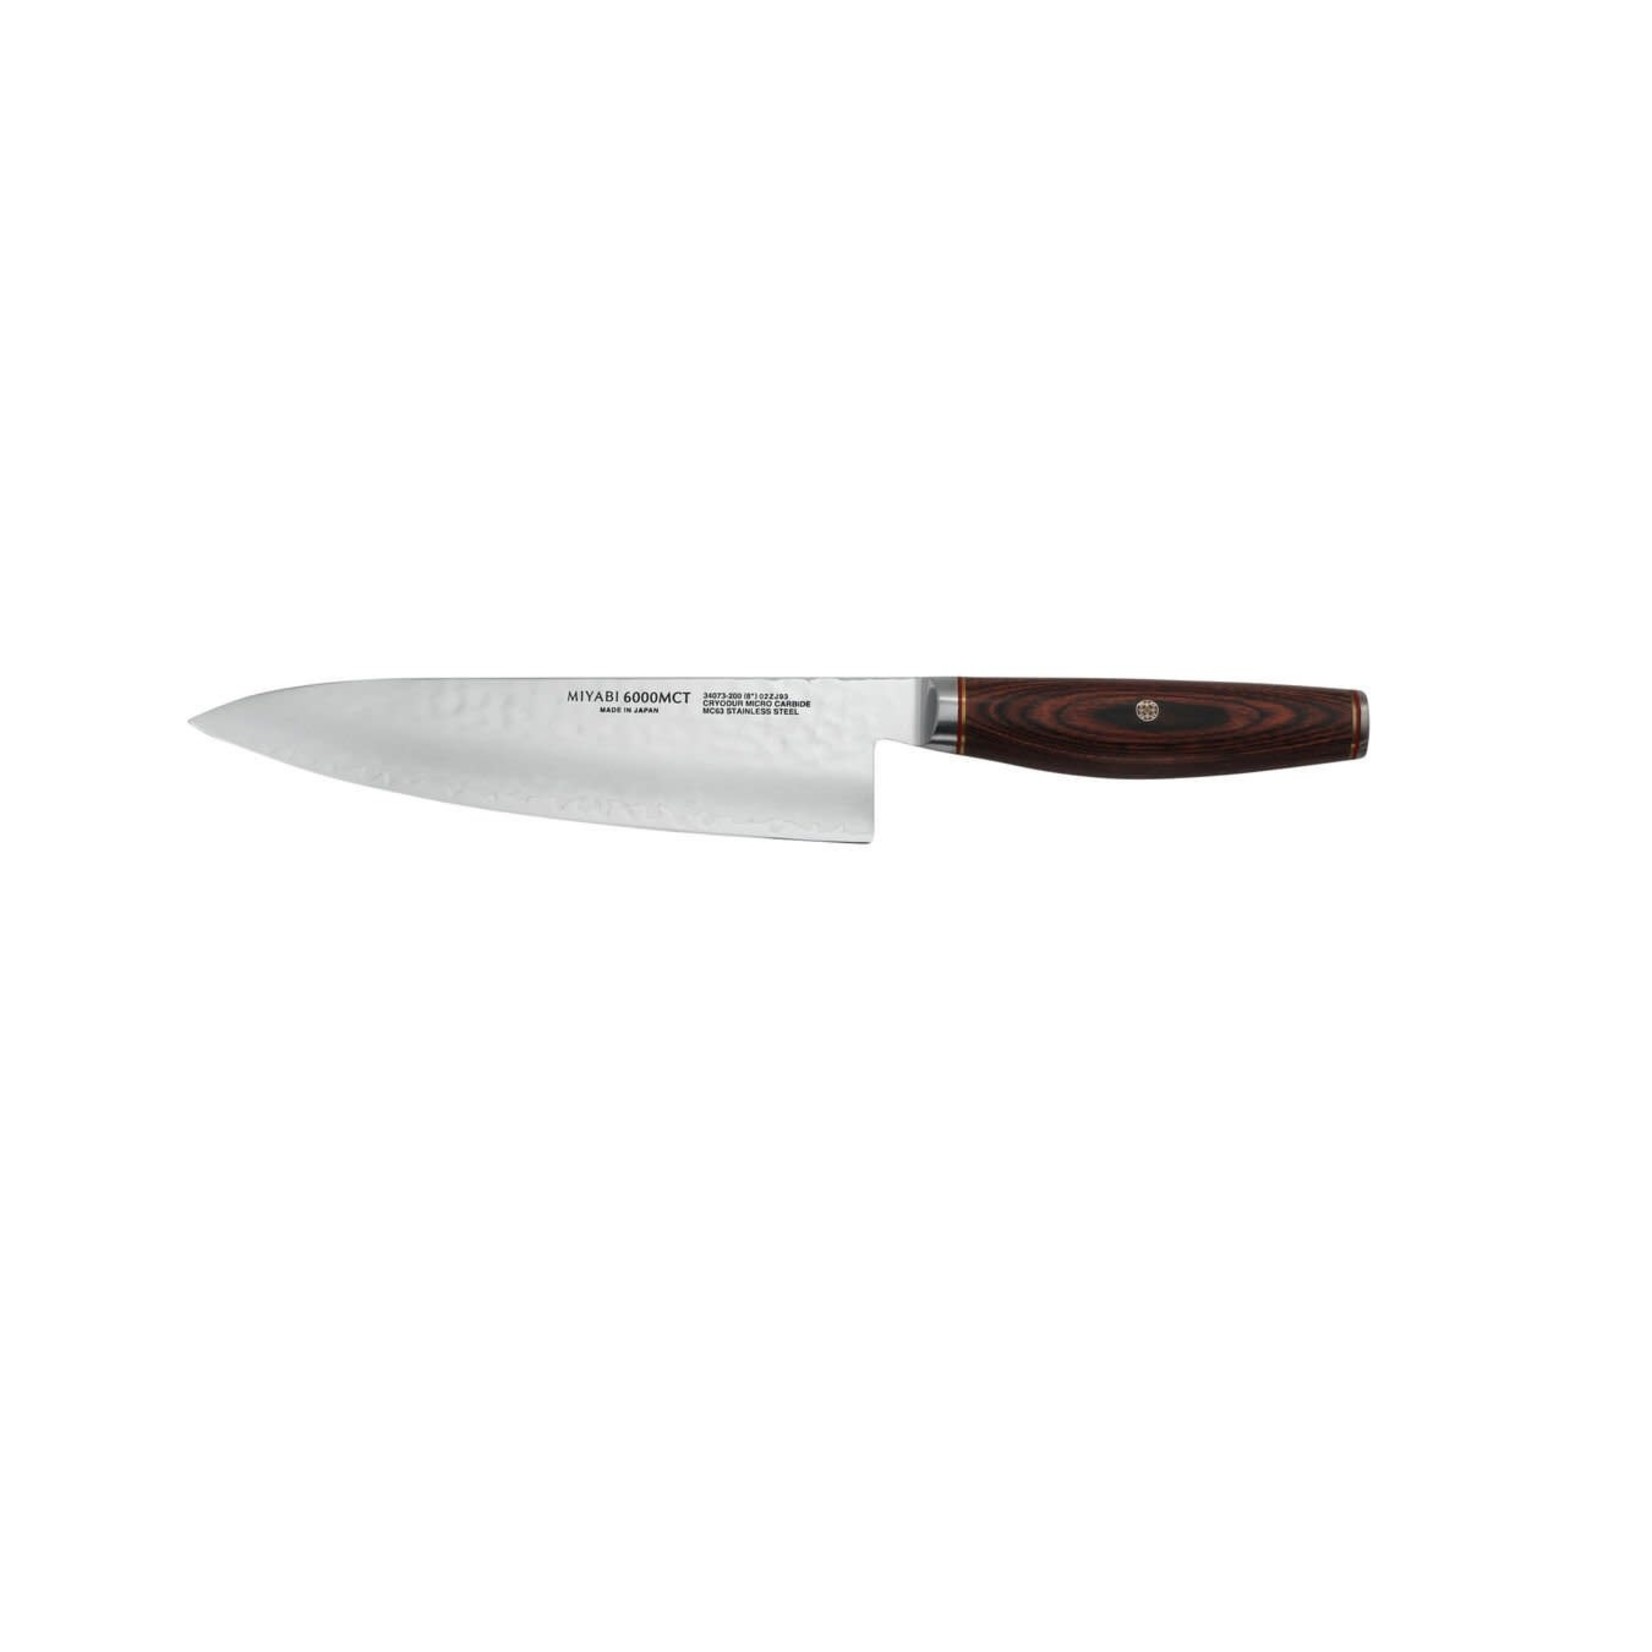 Zwilling Miyabi 6000 MCT 8" Chef's Knife